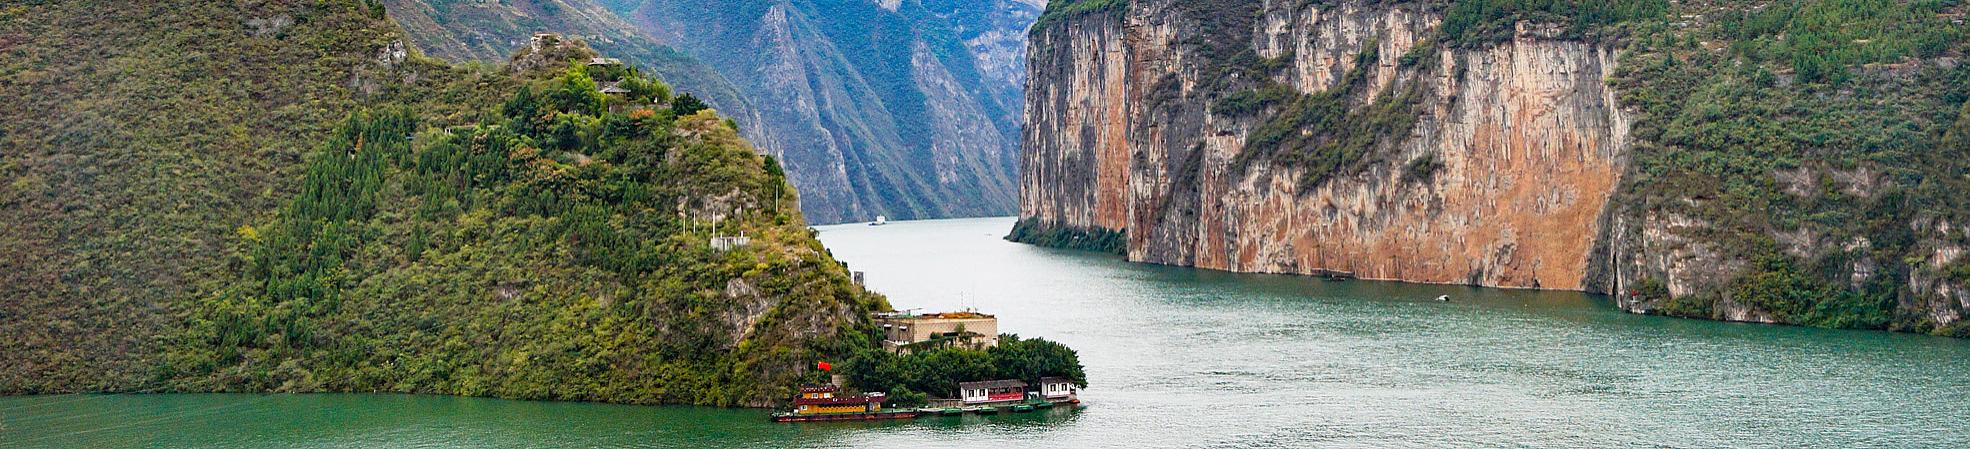 Yangtze River Cruise Photo Tours 